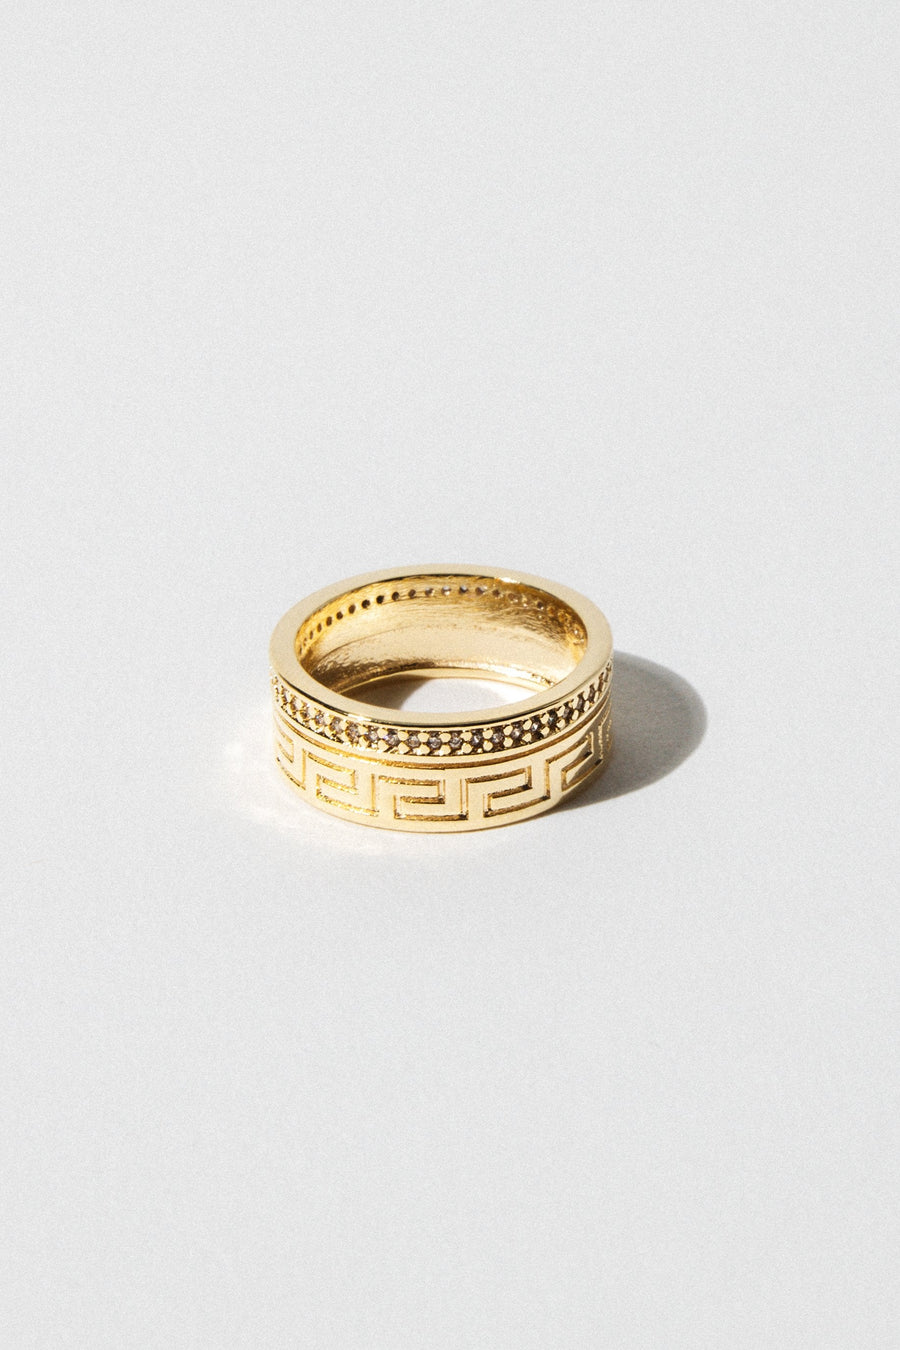 Dona Italia Jewelry US 6 / Gold Aztec Ring